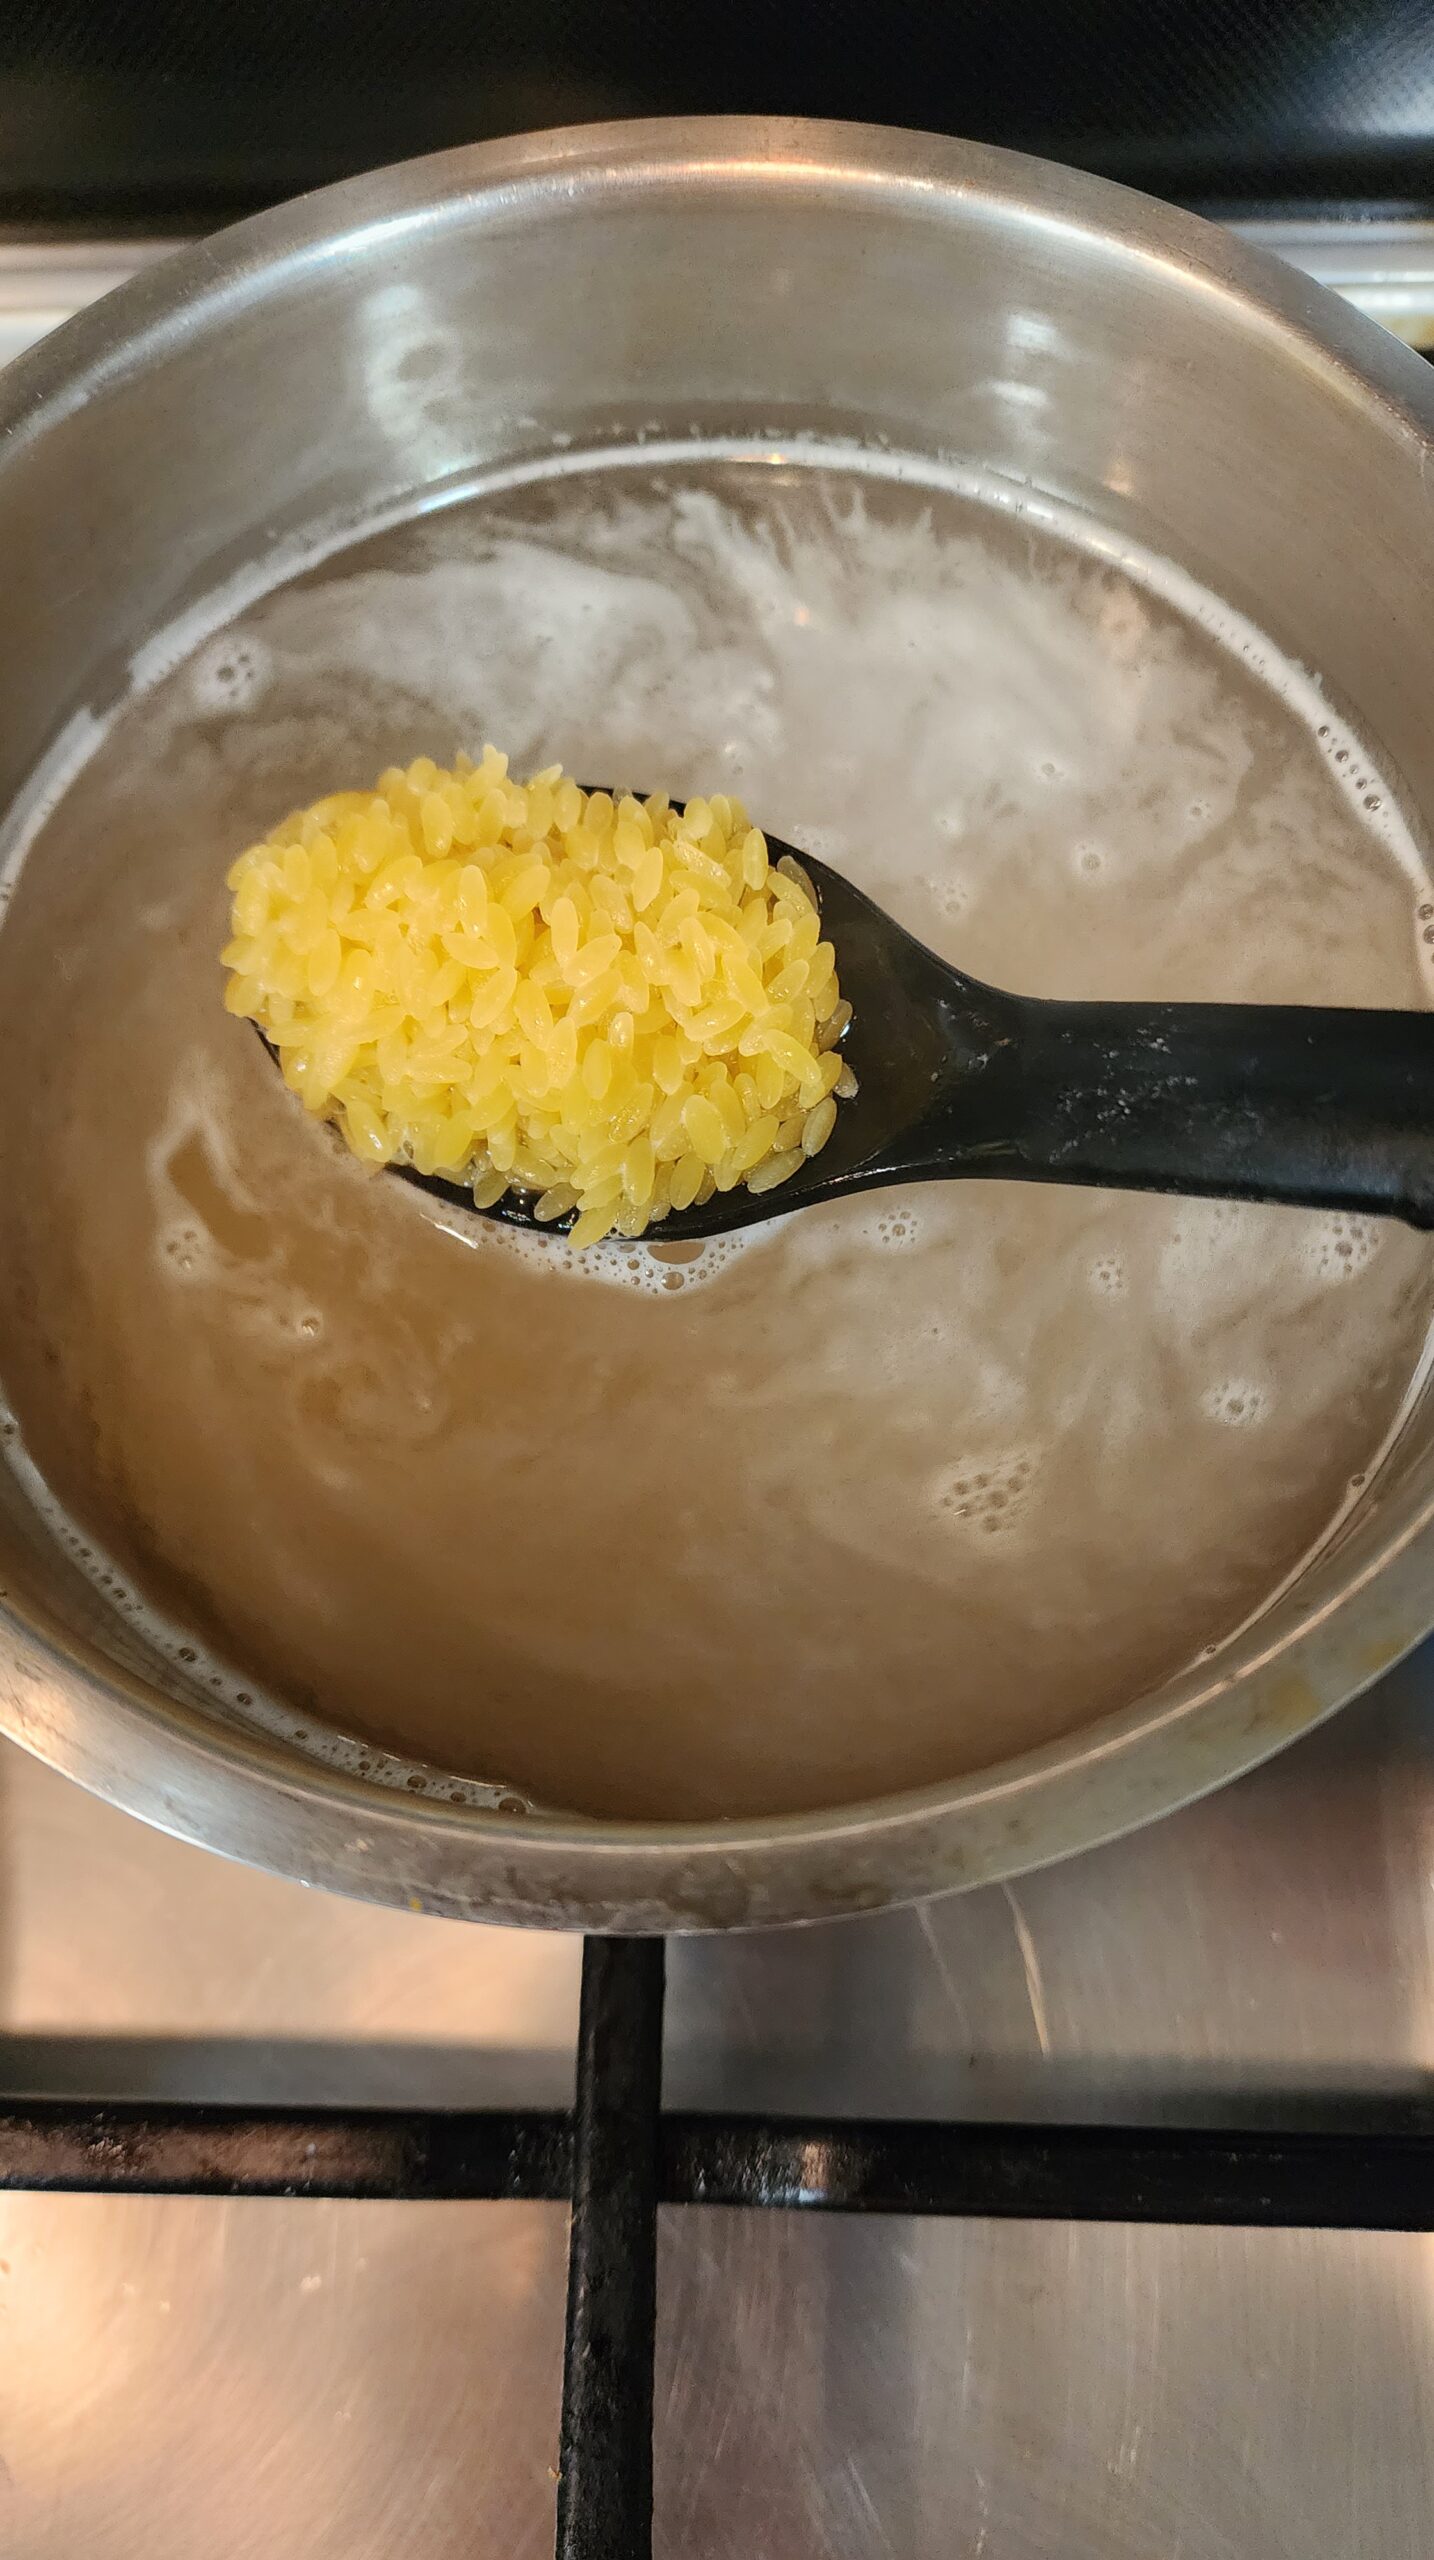 Boiled orzo pasta